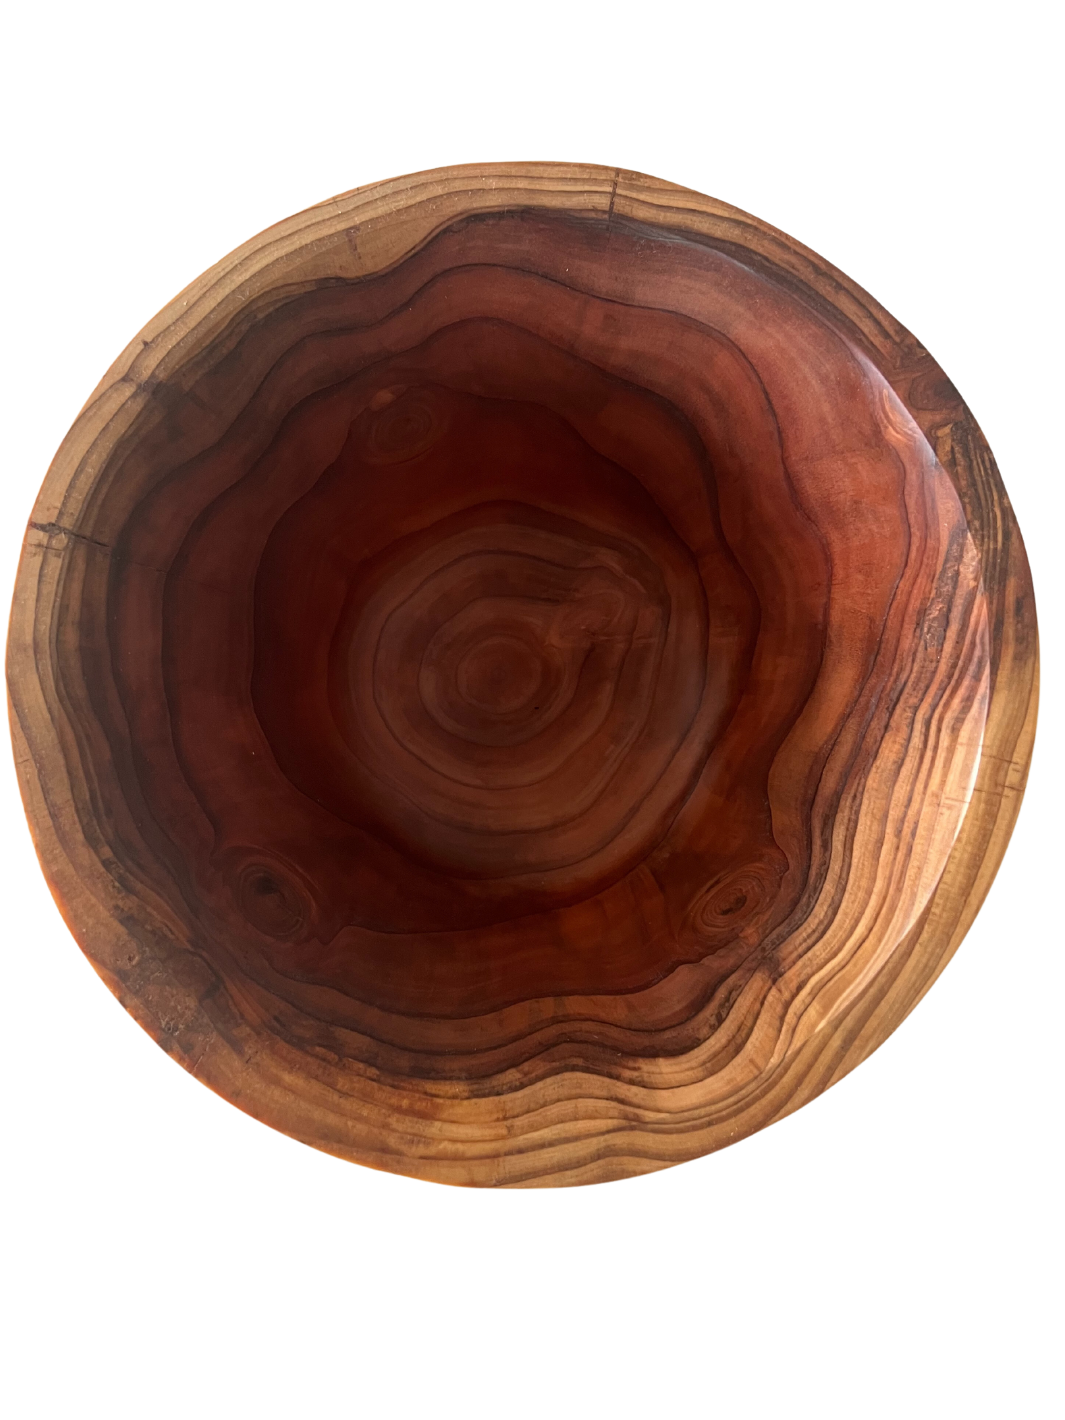 Sequoia Redwood Small Bowl